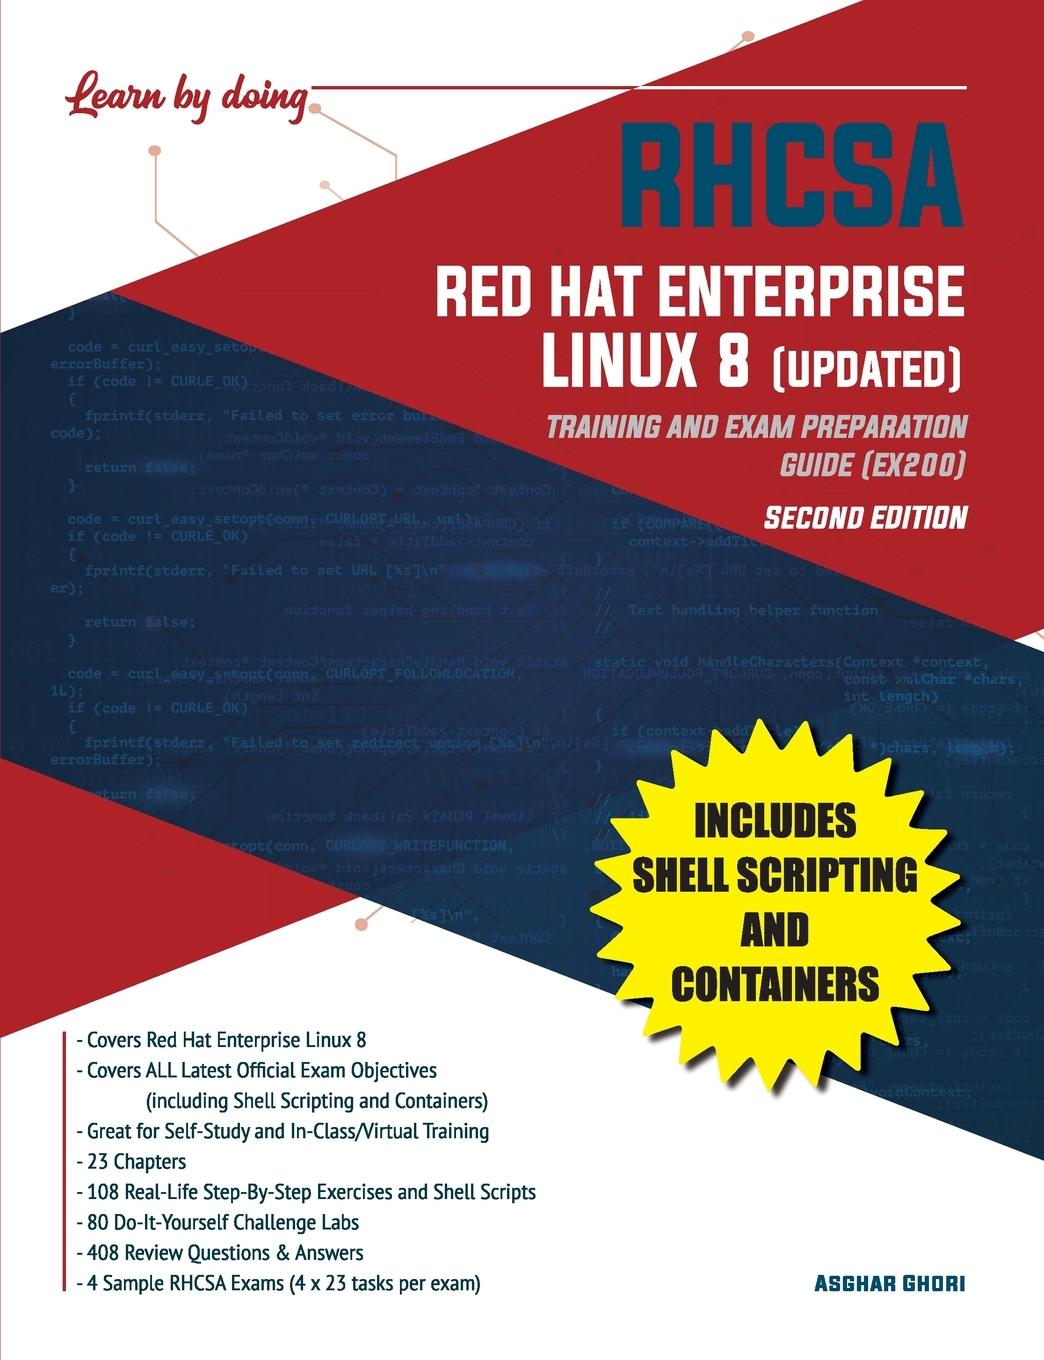 Carte RHCSA Red Hat Enterprise Linux 8 (UPDATED) 